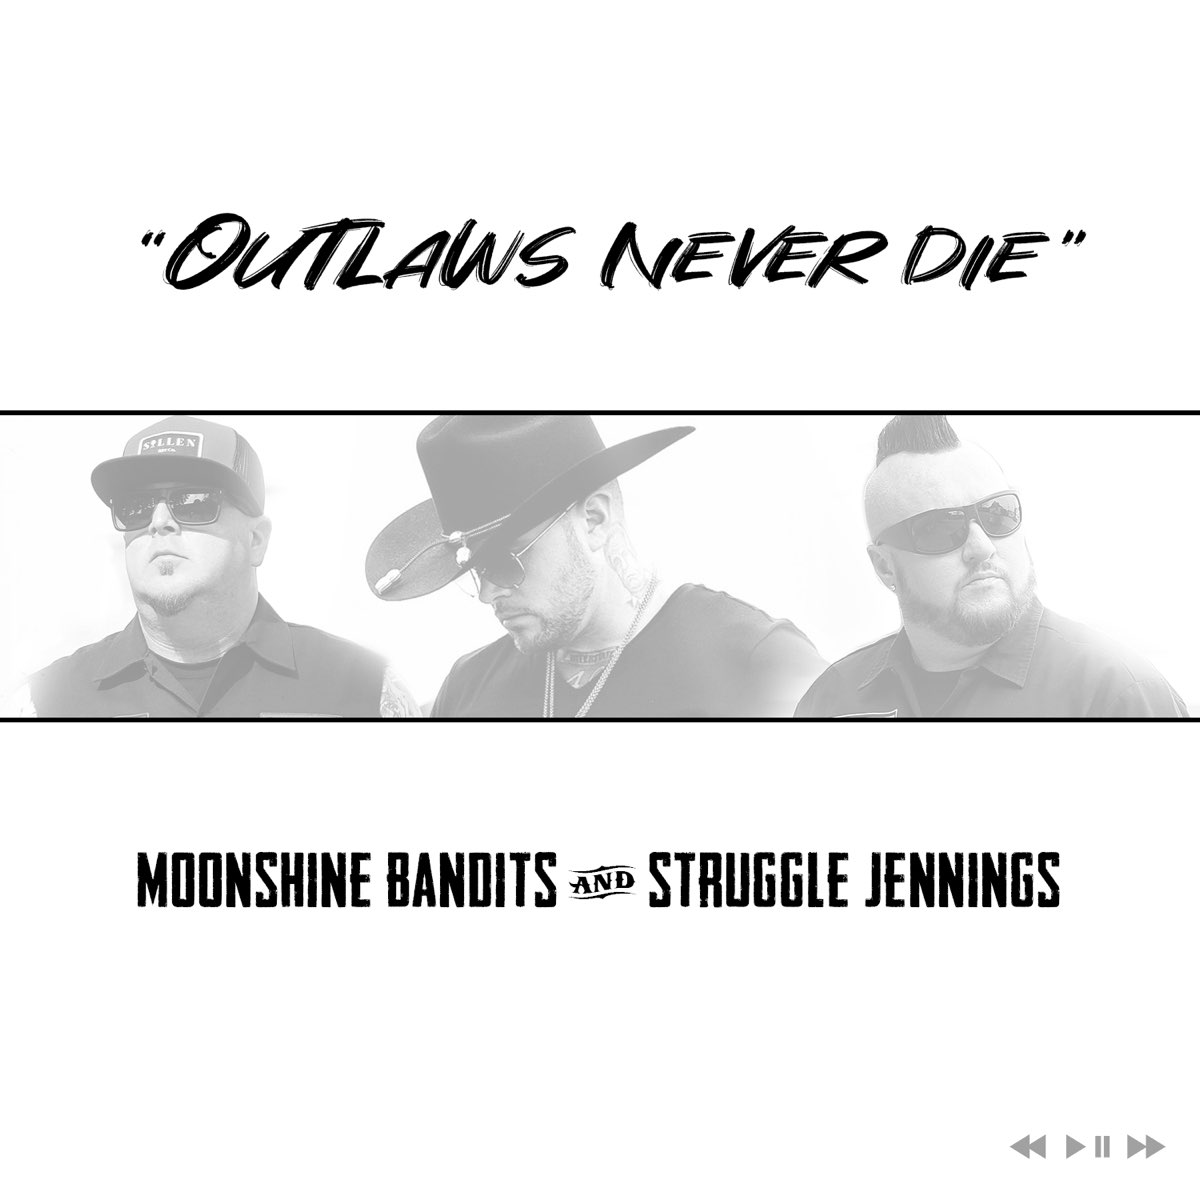 Outlaw бандит. Never die исполнитель. "Moonshine Bandits" && ( исполнитель | группа | музыка | Music | Band | artist ) && (фото | photo). Moonshine Bandits. Люби бандита песня